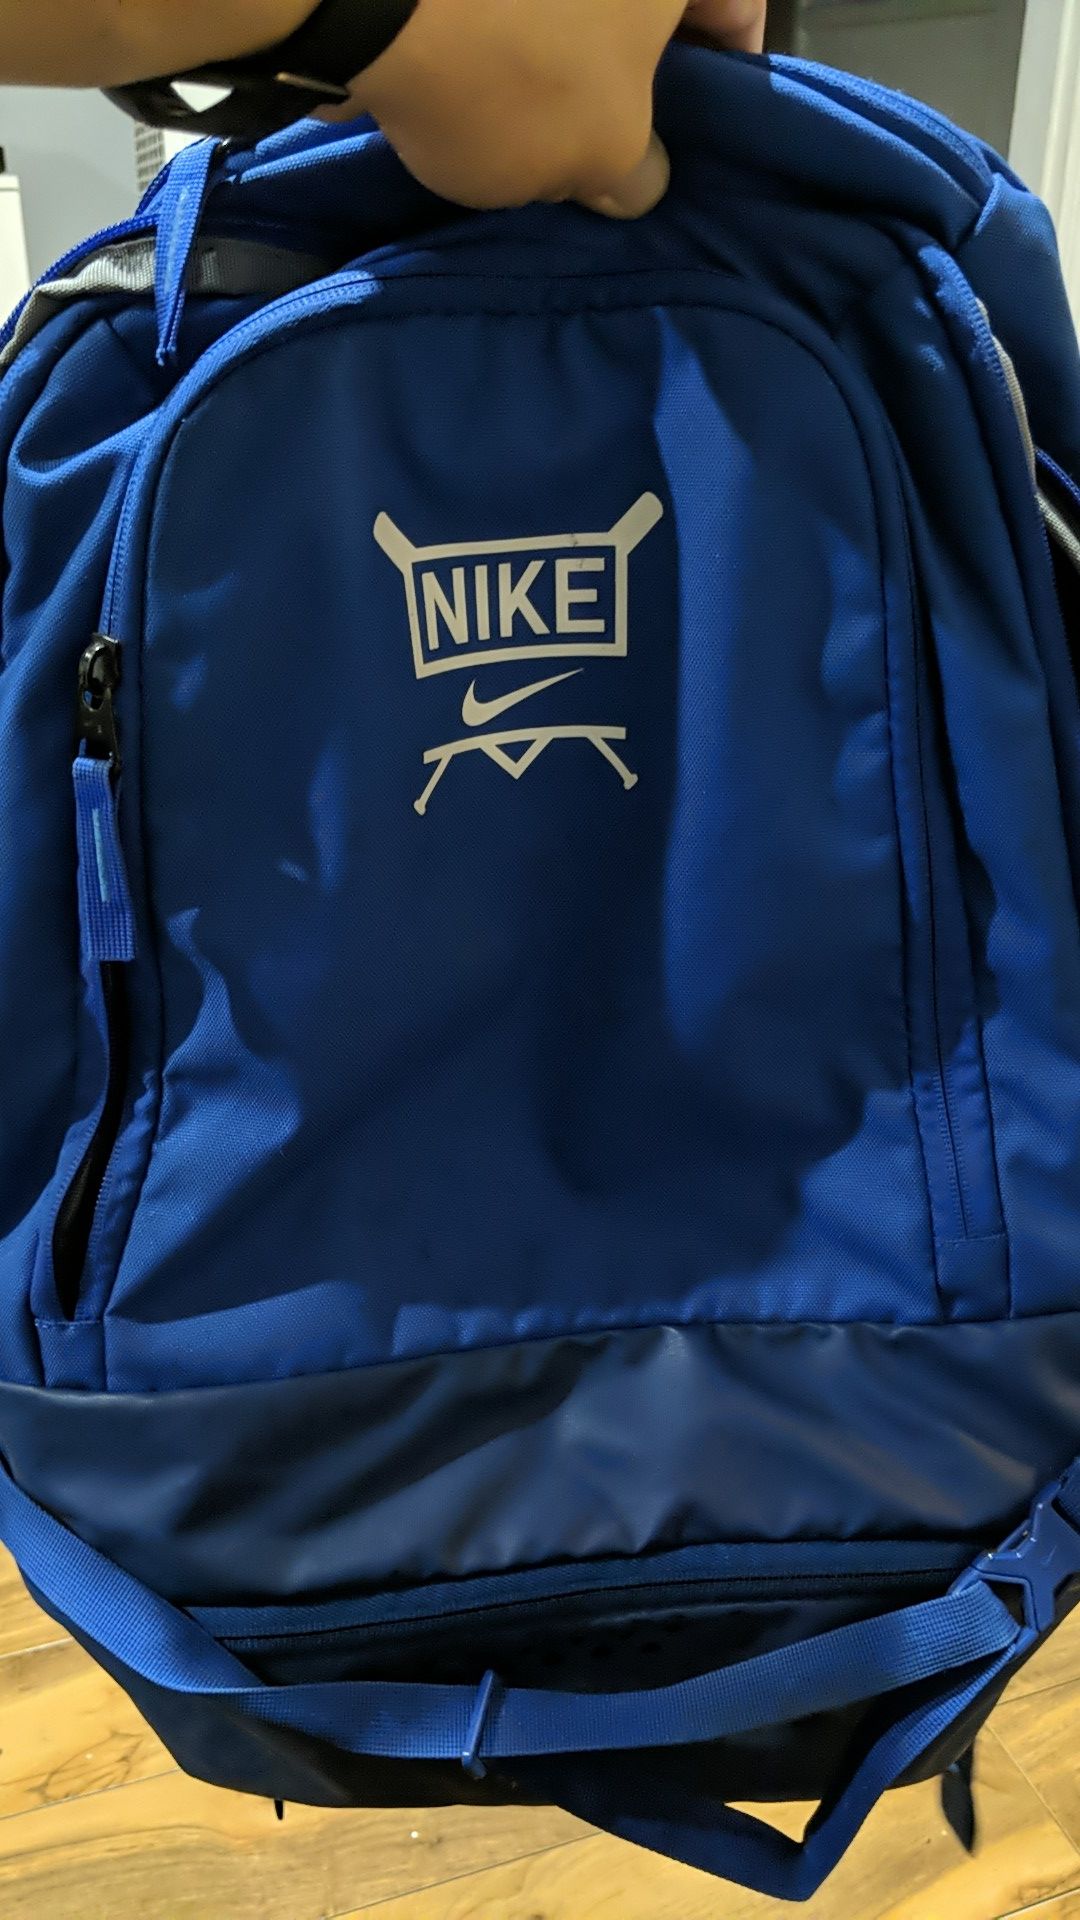 Nike baseball backpack used 15$ no holes